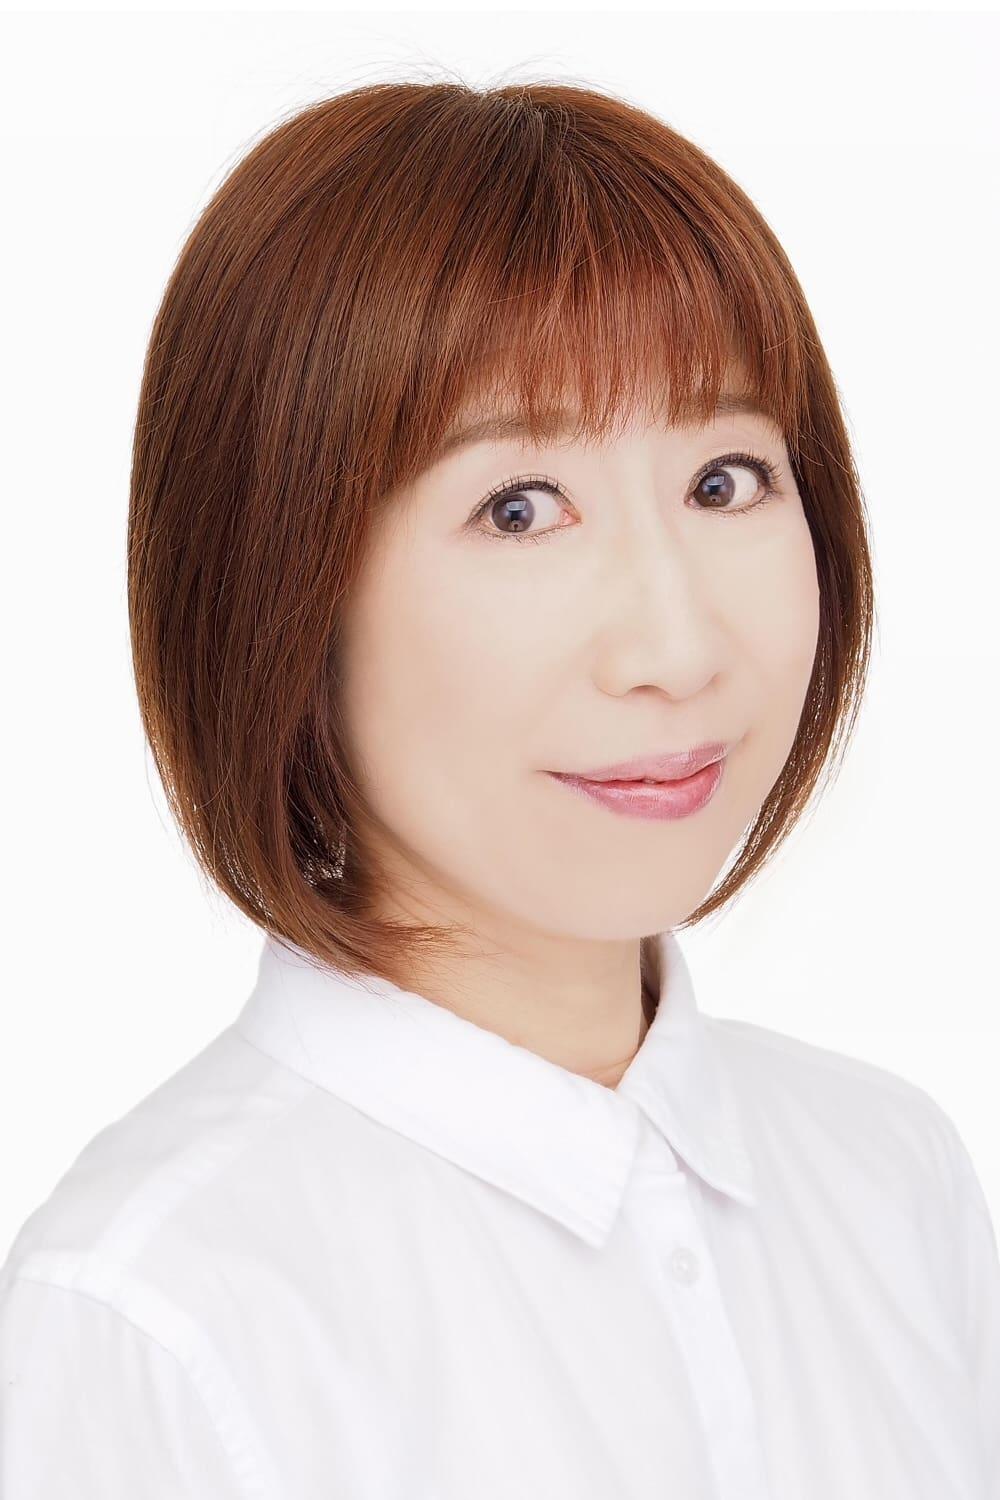 Naoko Watanabe | Chi Chi (voice)